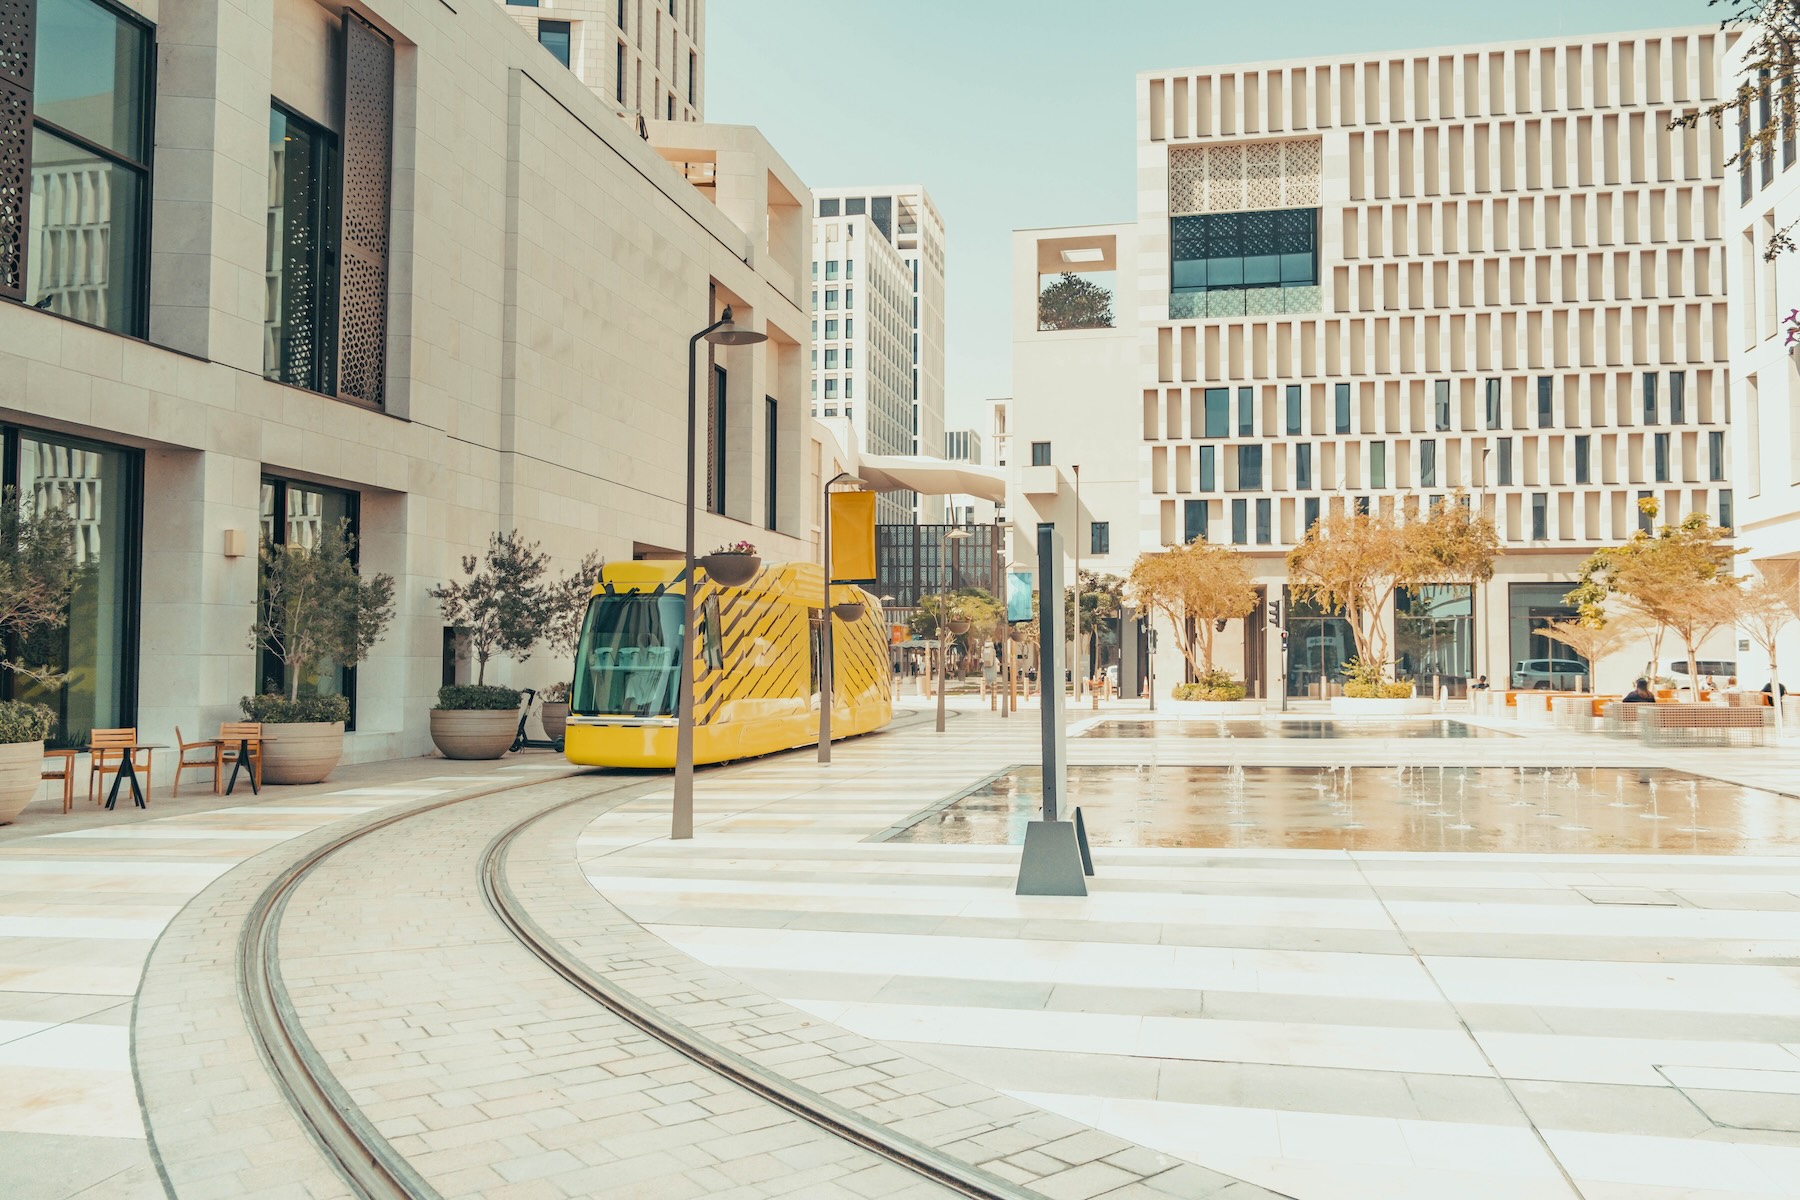 A tram drives down an empty street in Doha, Qatar